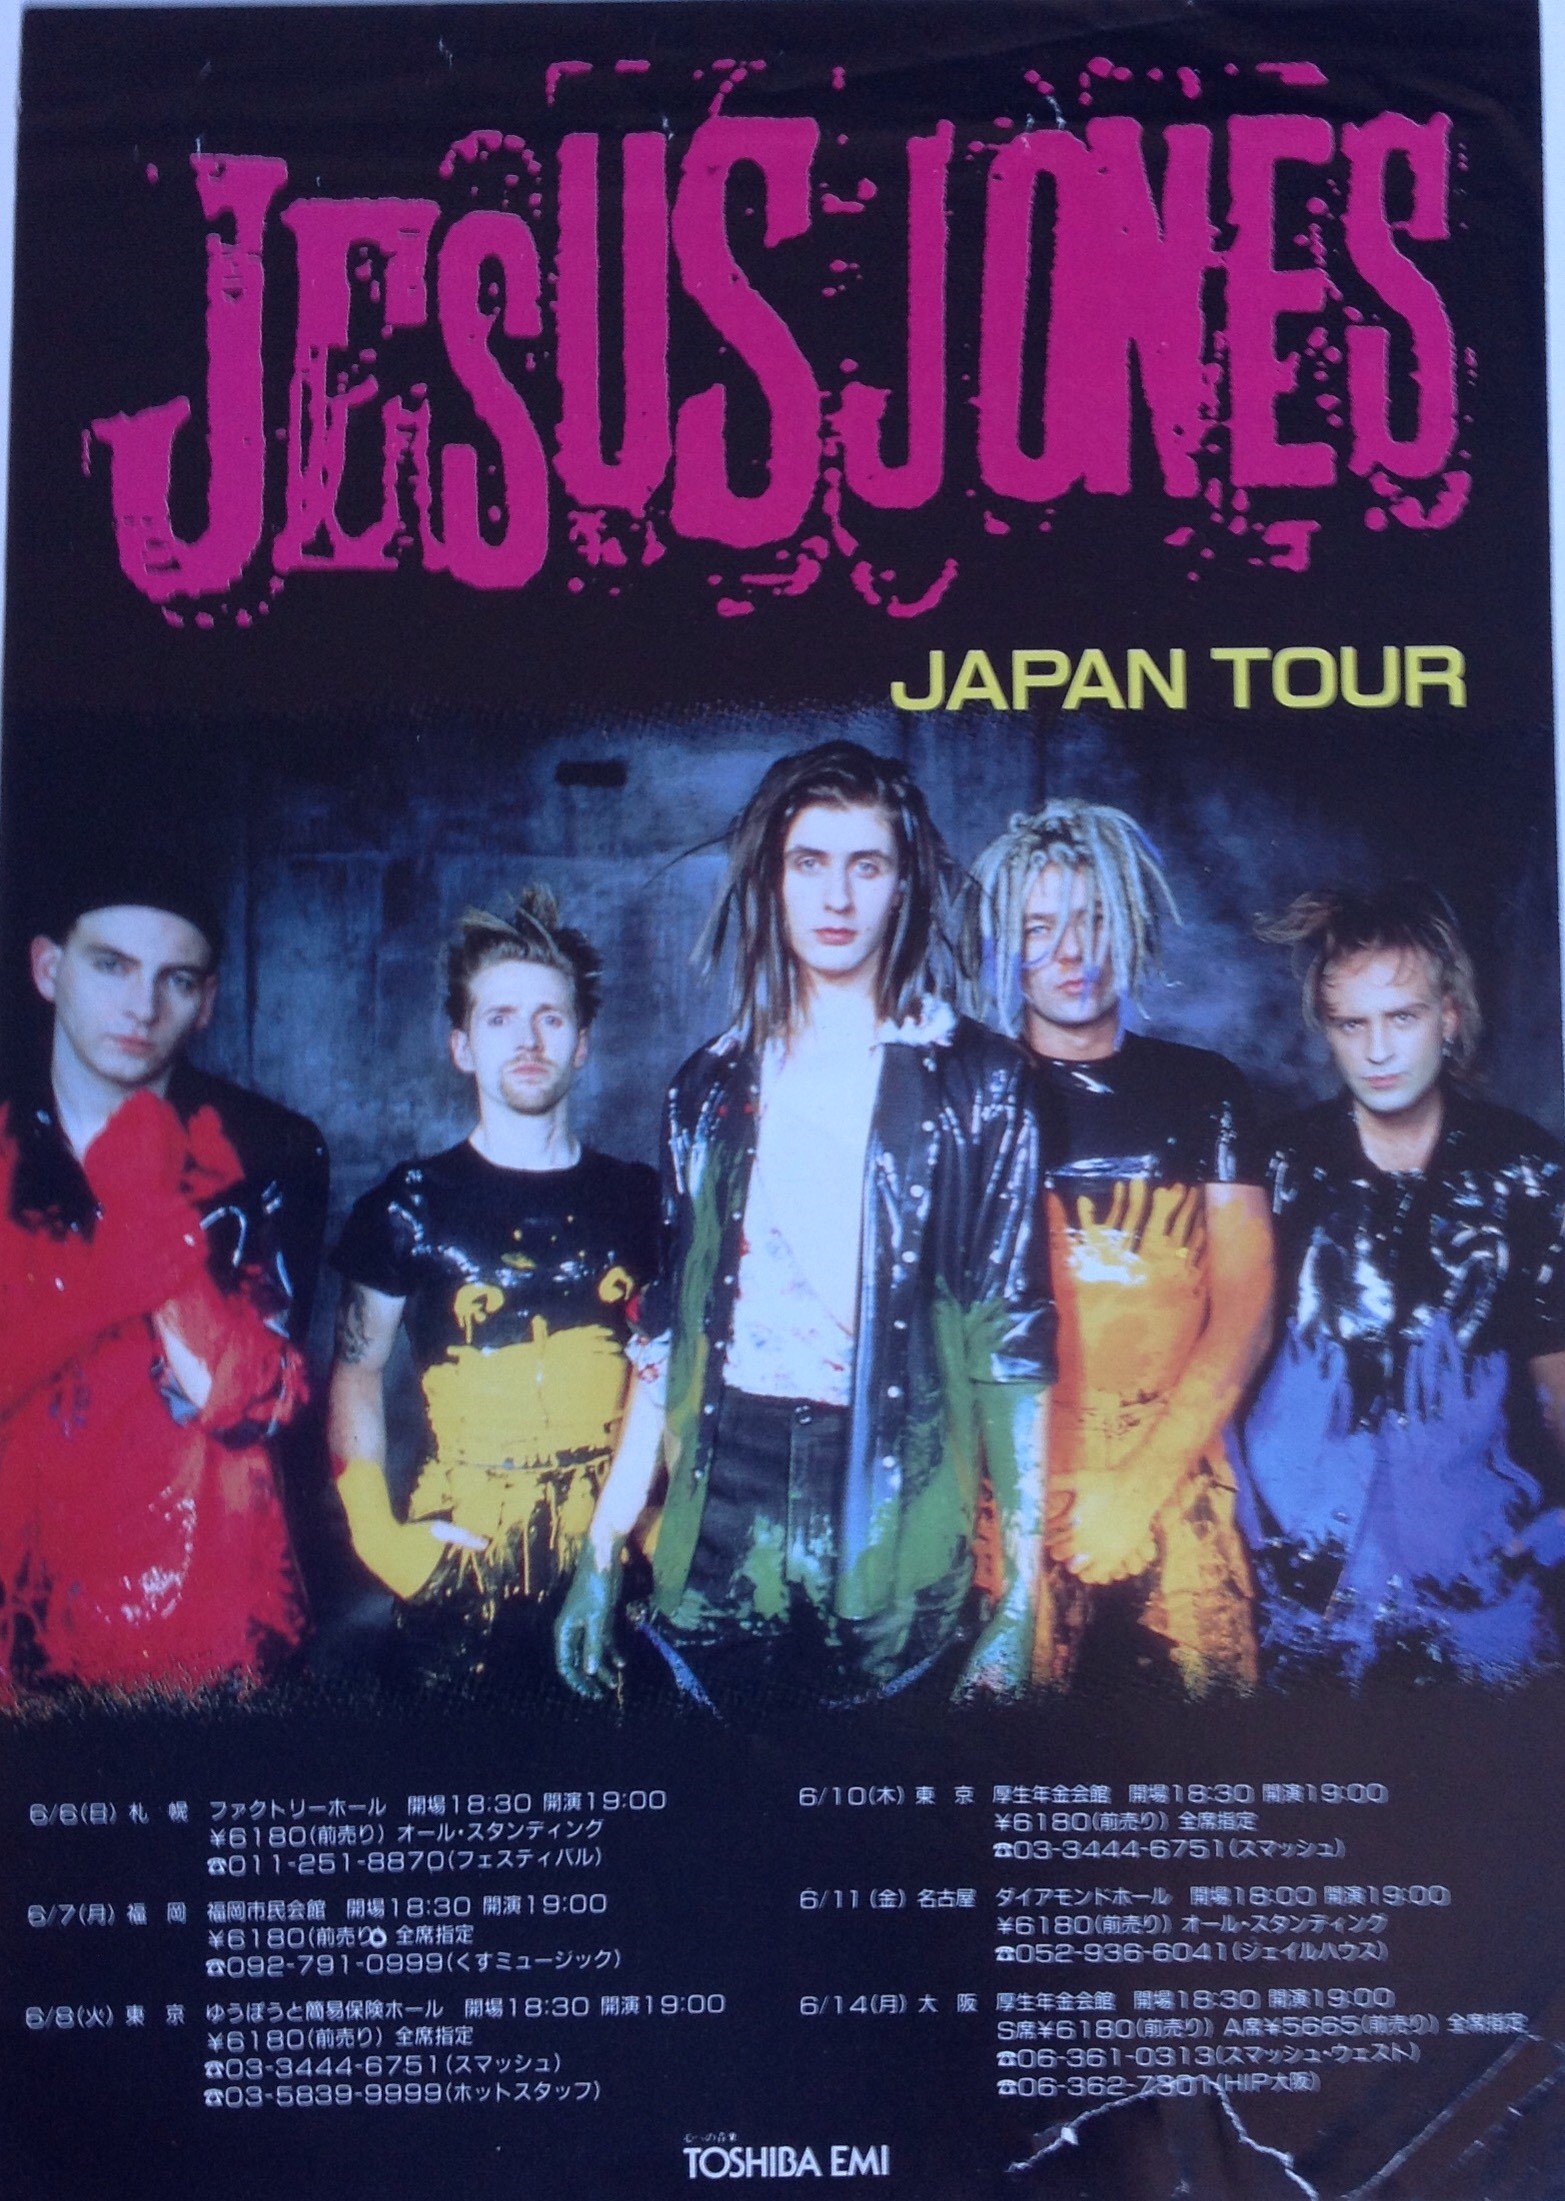 Jesus Jones Archive - 1993